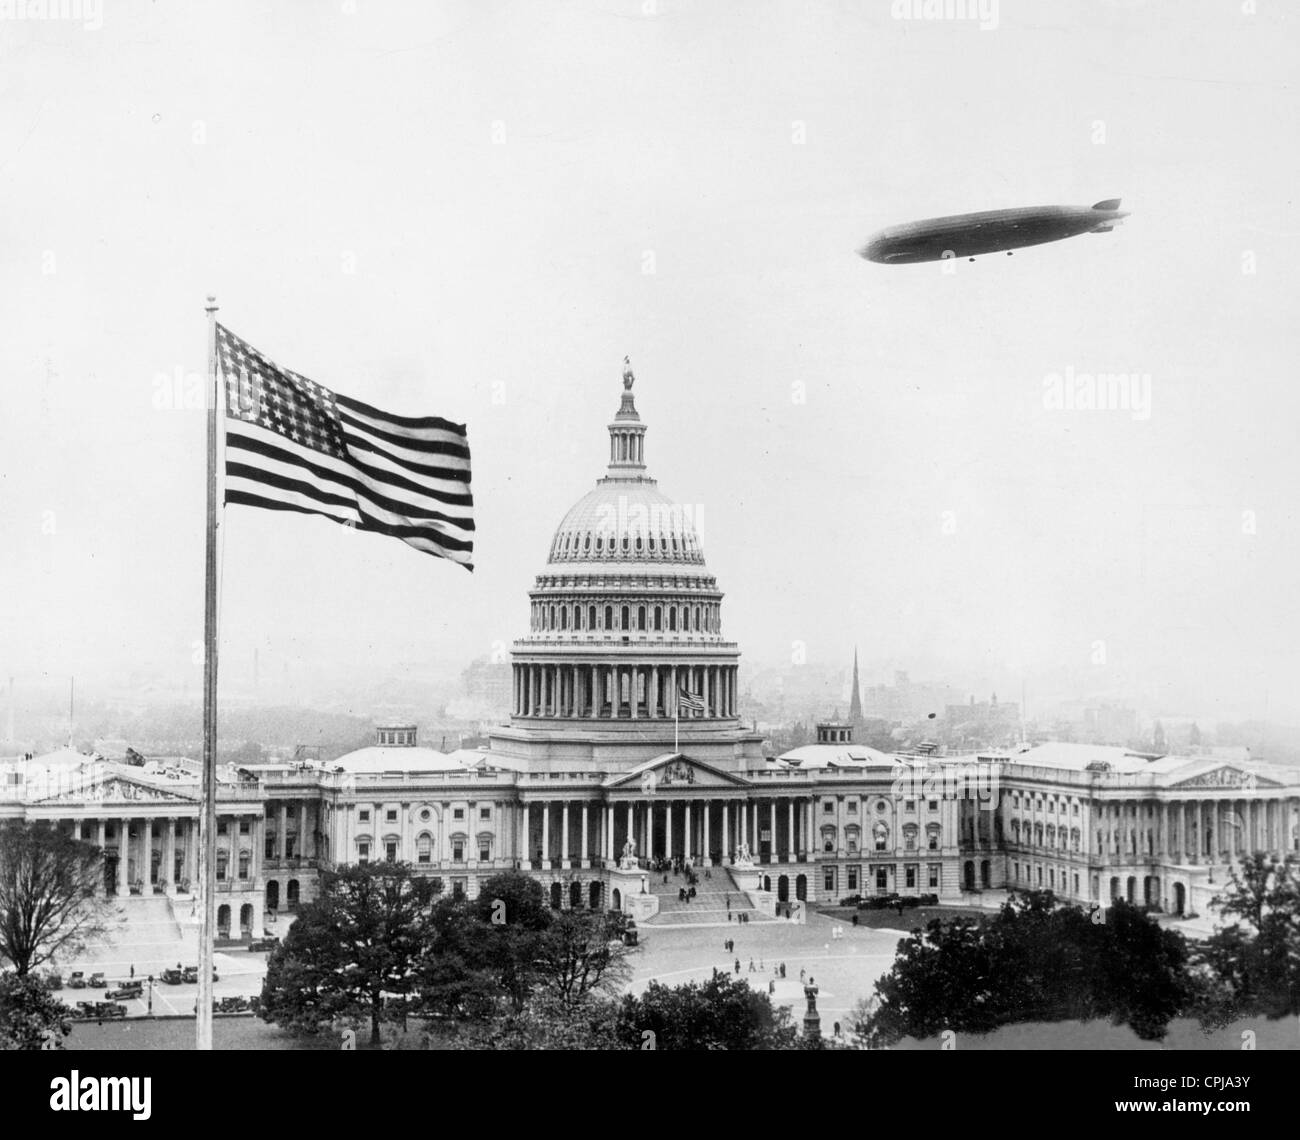 LZ 127 'Graf Zeppelin' over Washington, 1928 Stock Photo - Alamy